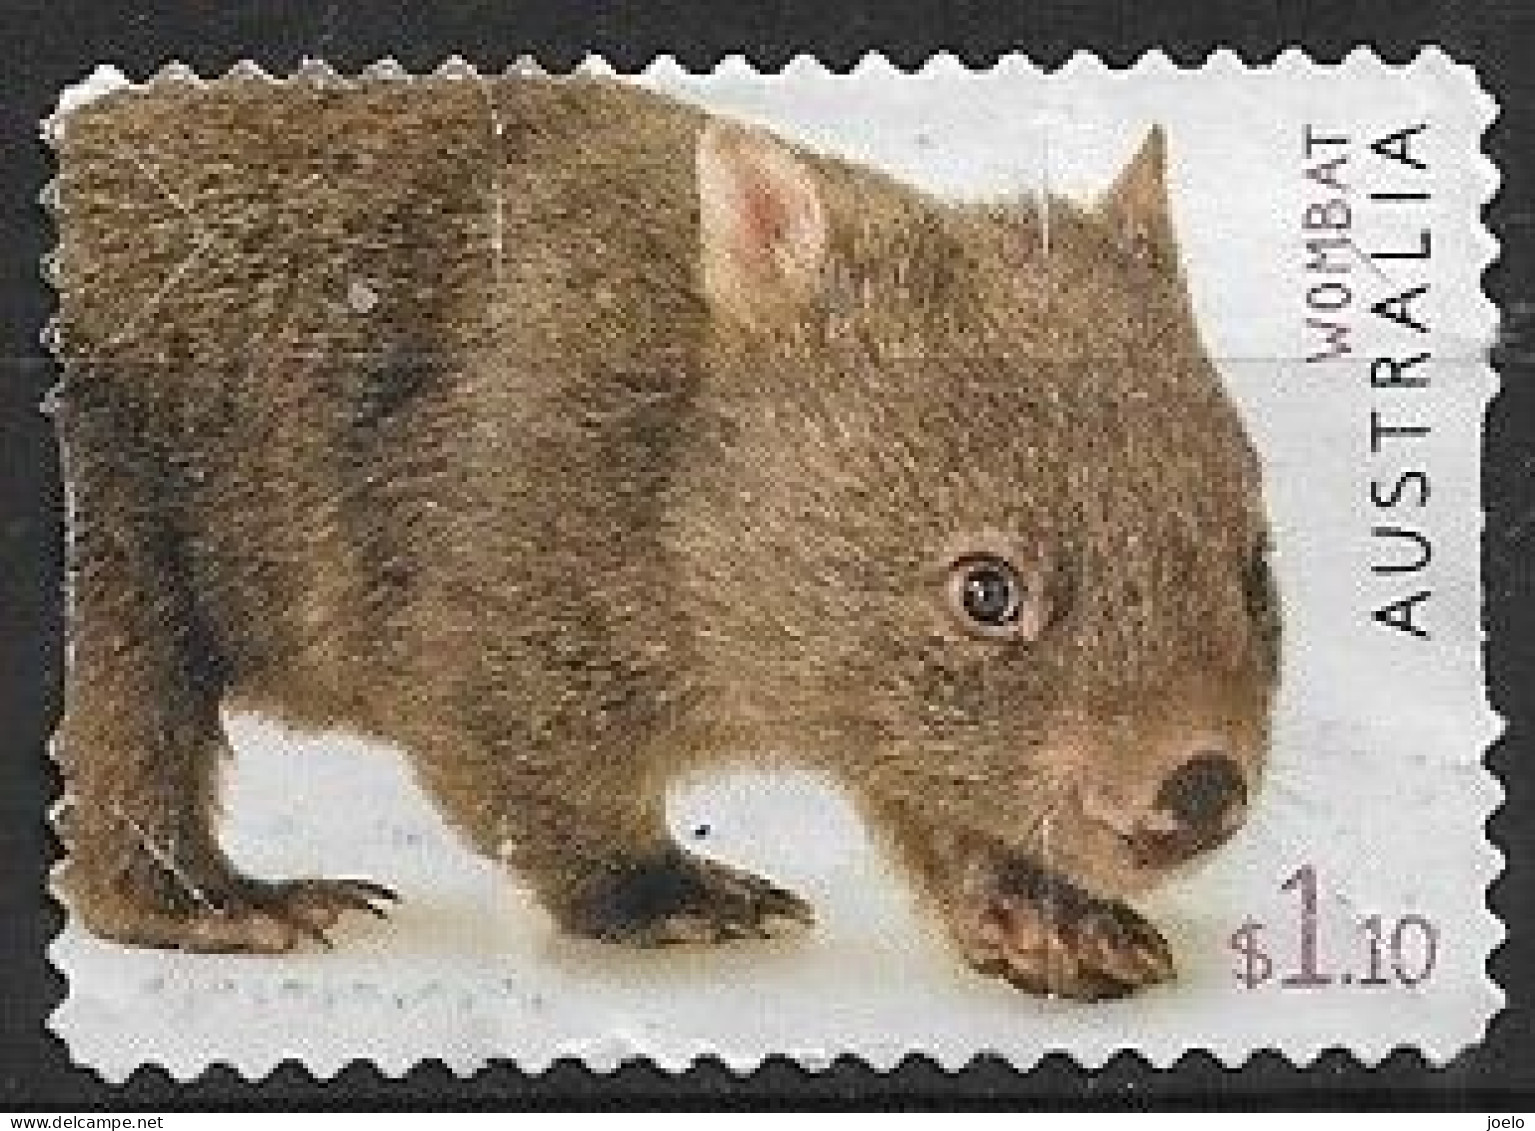 AUSTRALIA 2019 FAUNA WOMBAT $1.10 - Used Stamps